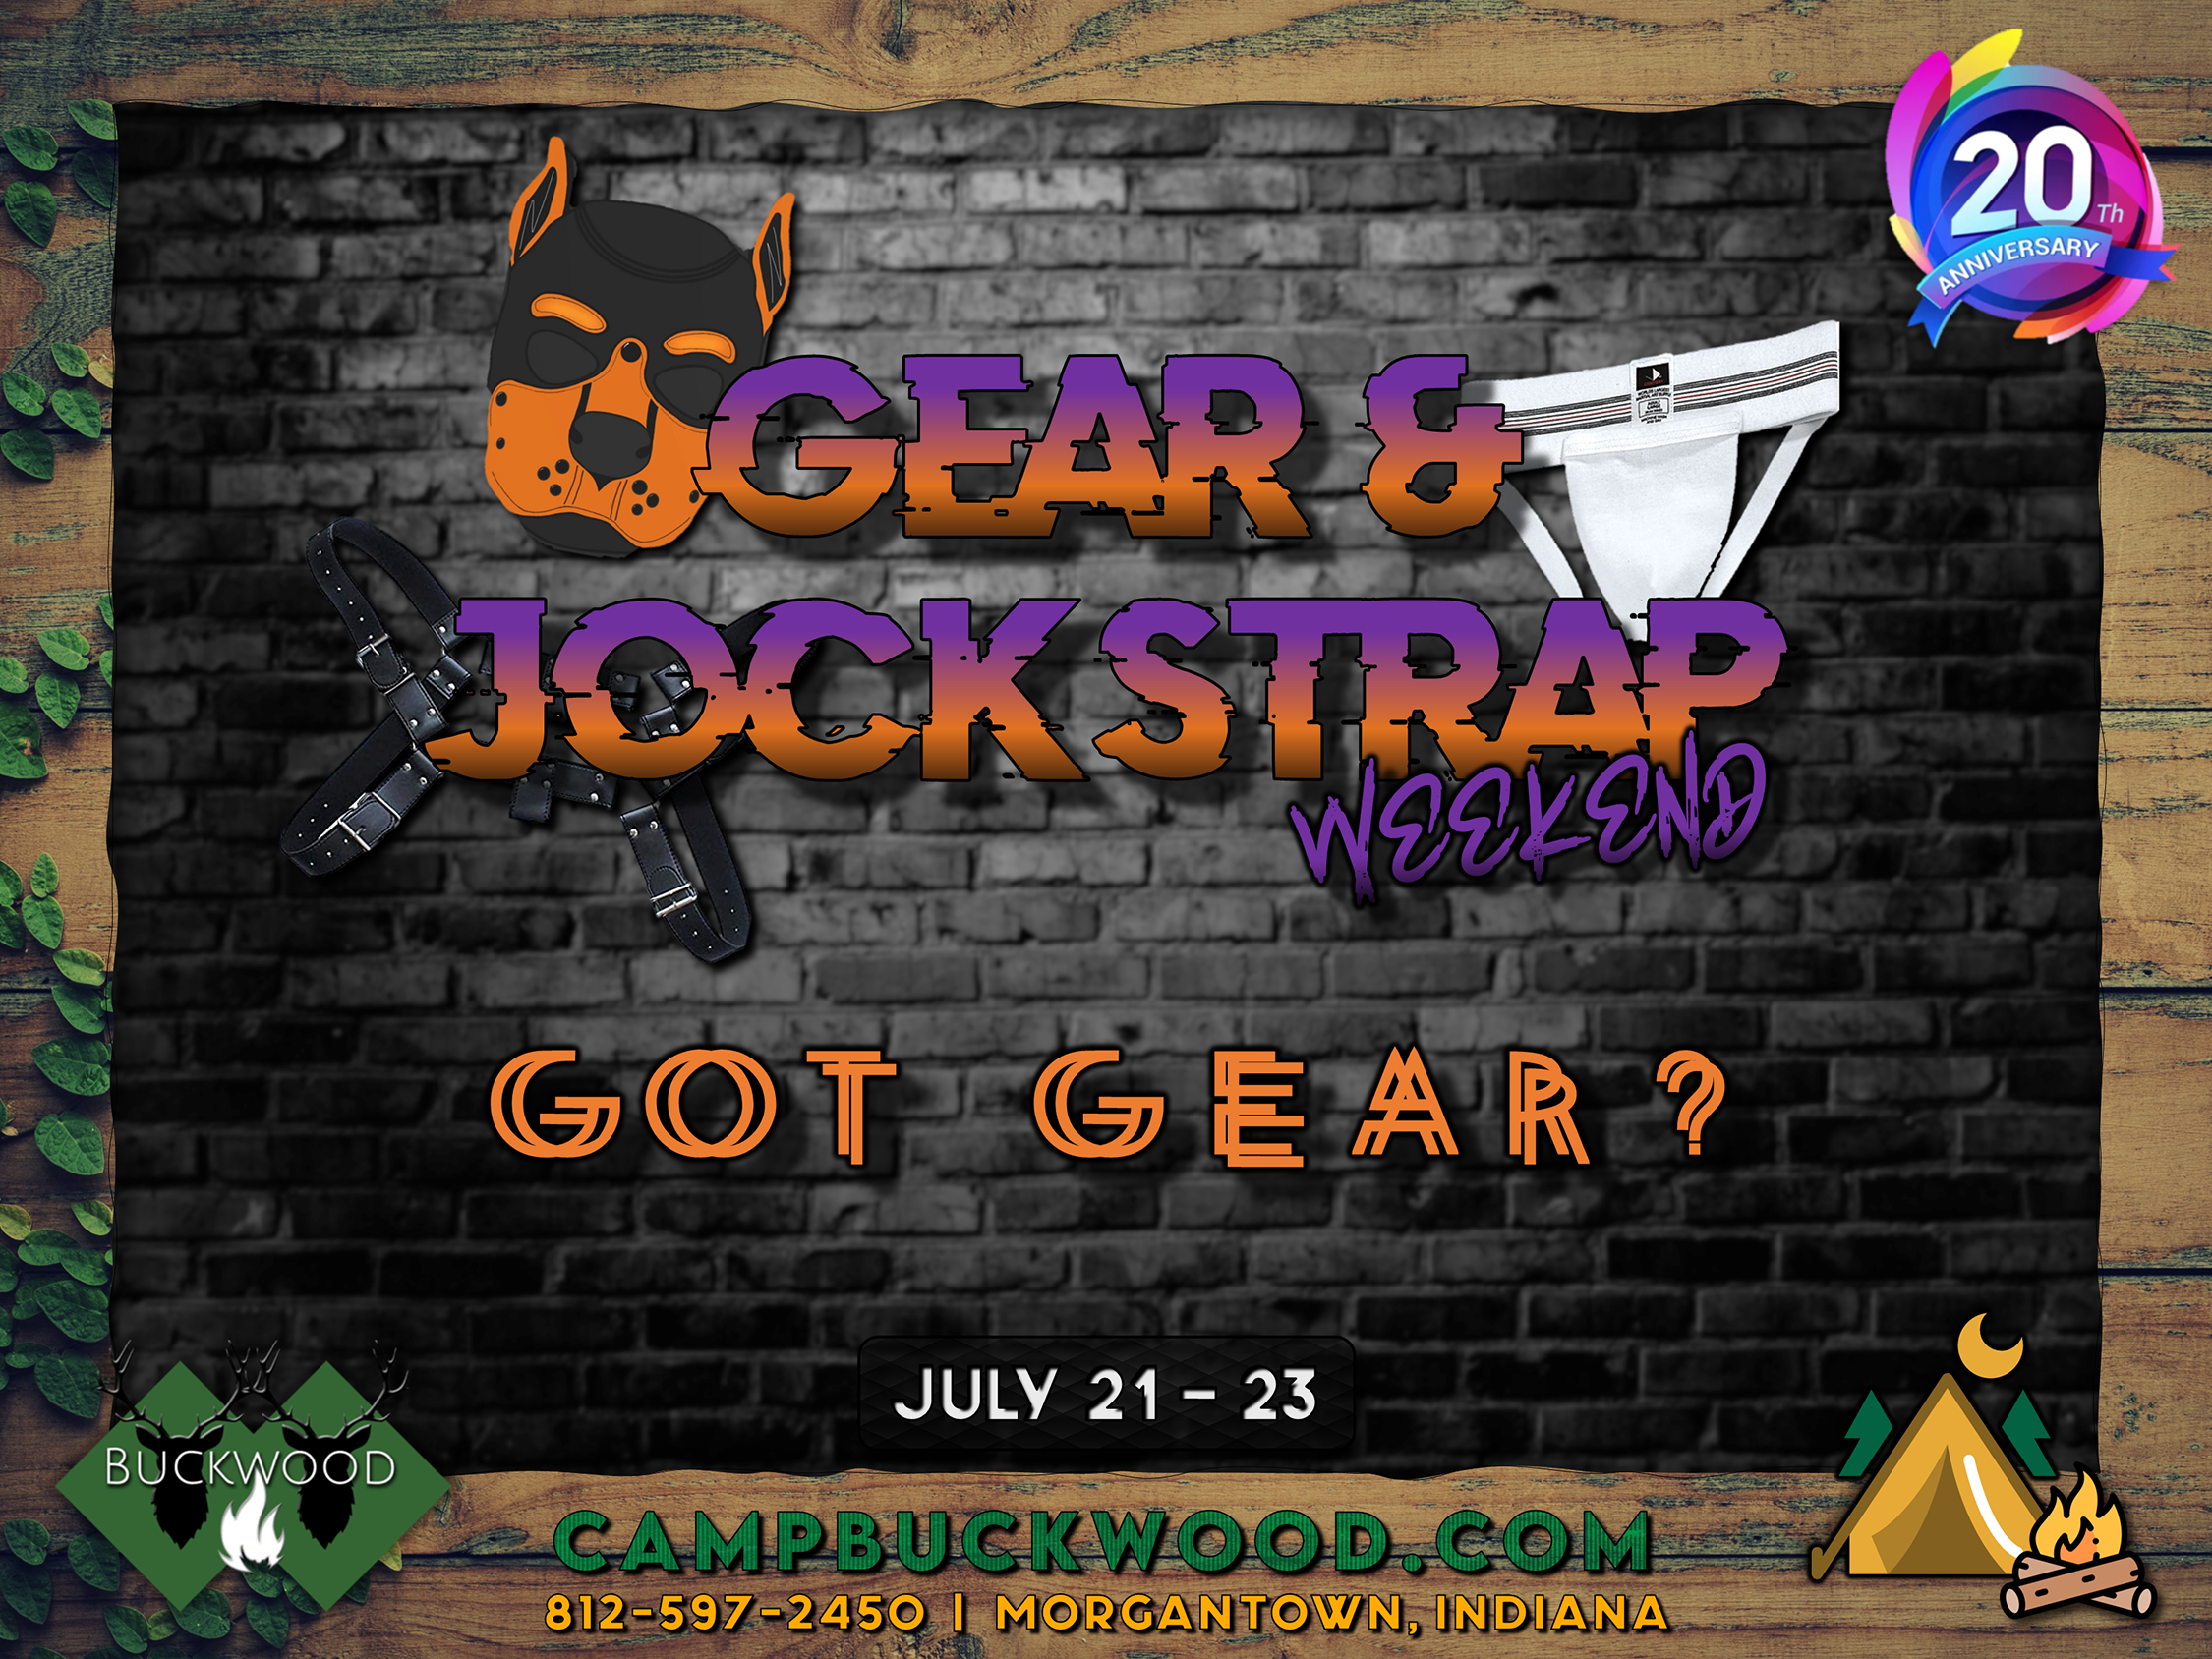 Camp Buckwood 2023 Gear and Jockstrap Weekend Event